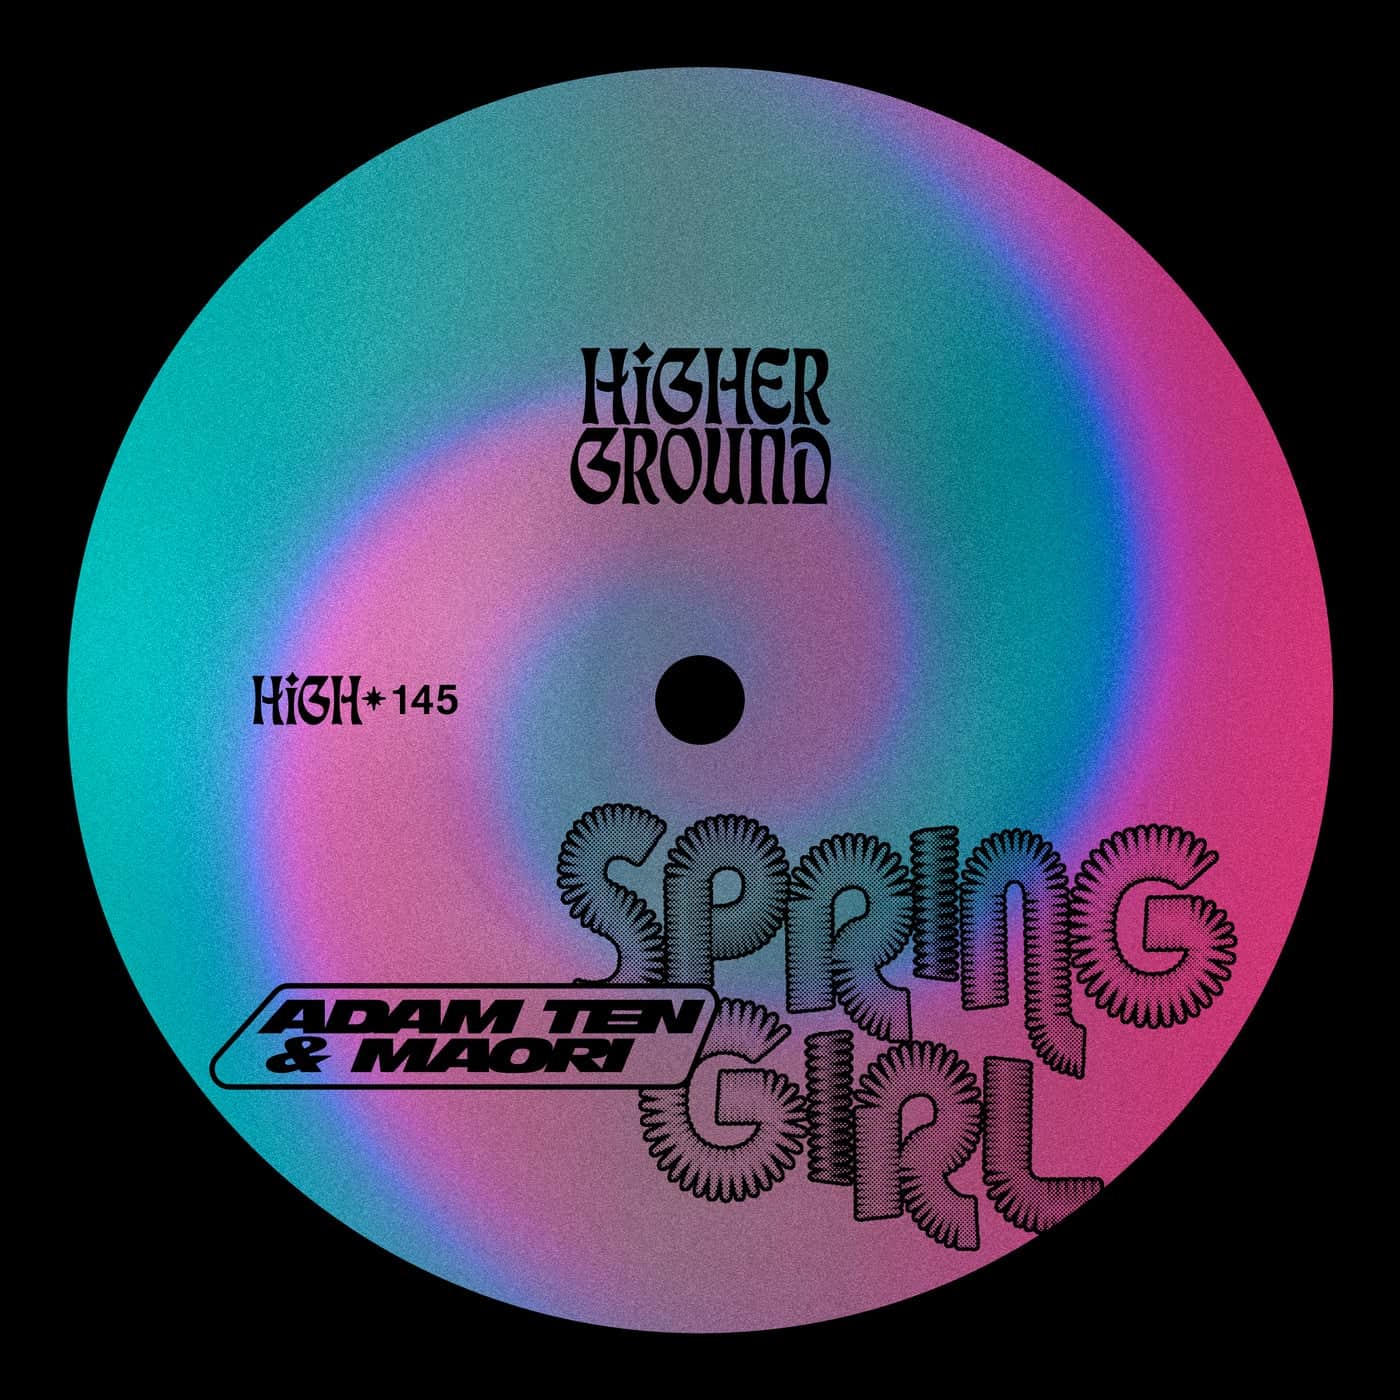 Release Cover: Maori, Adam Ten - Spring Girl (Extended) on Electrobuzz